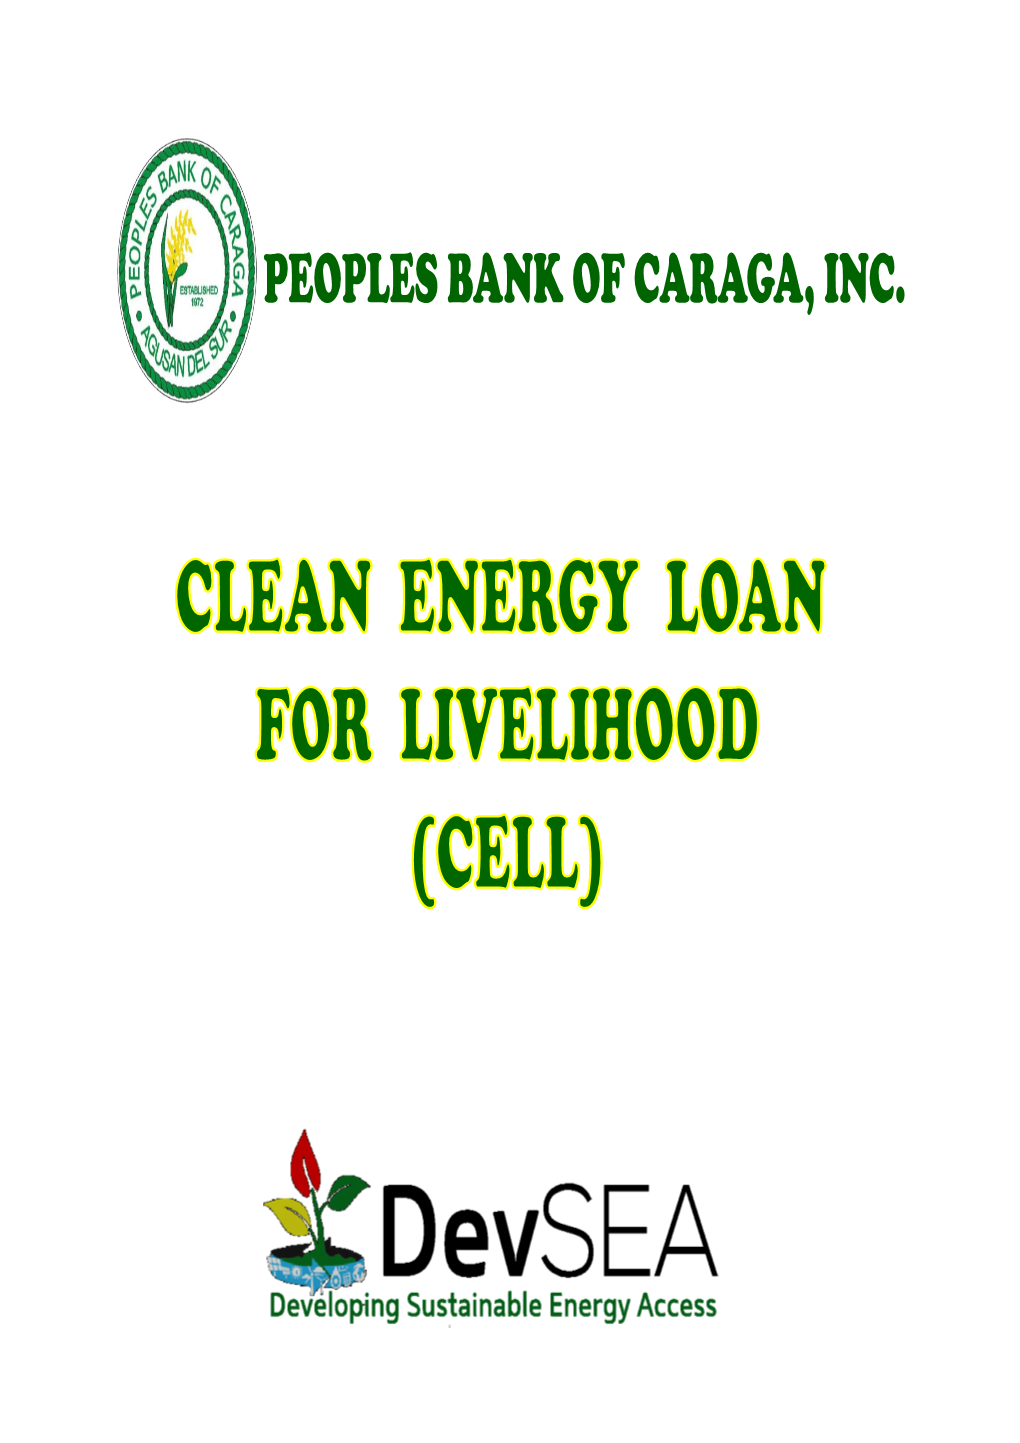 Peoples Bank of Caraga, Inc